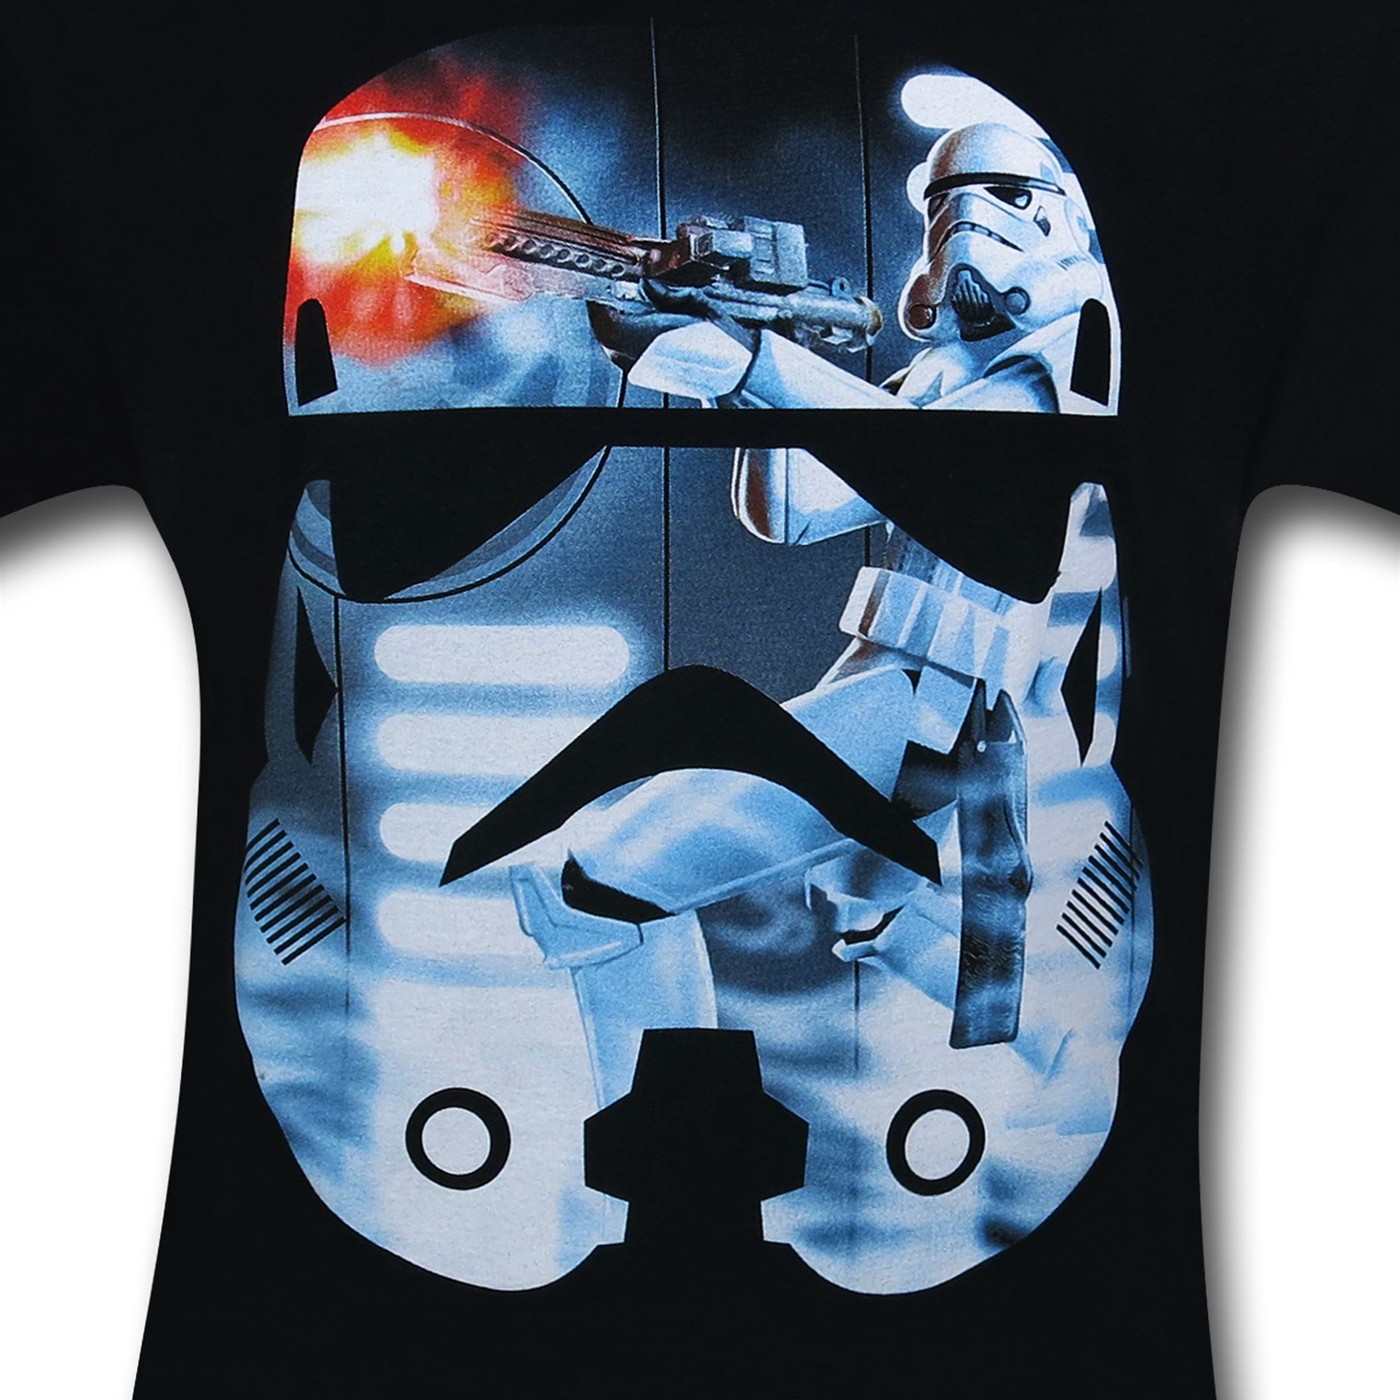 Star Wars Stormtrooper Fill 30 Single T-Shirt